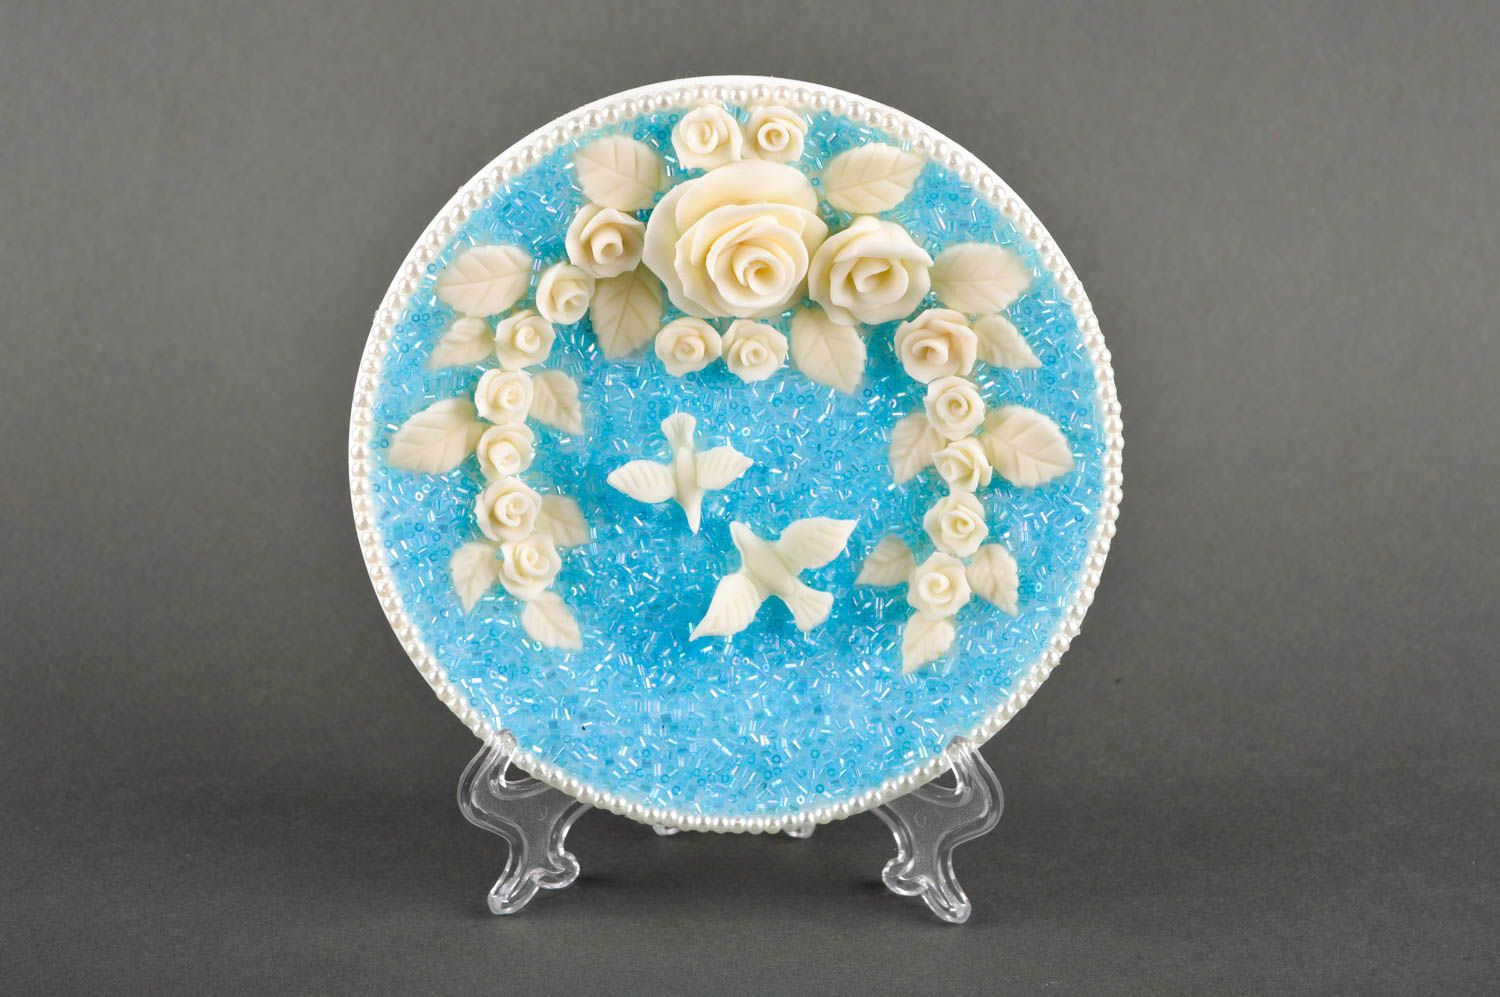 Свадебная тарелка хэнд мэйд посуда на свадьбу красивая посуда голубая тарелка фото 2